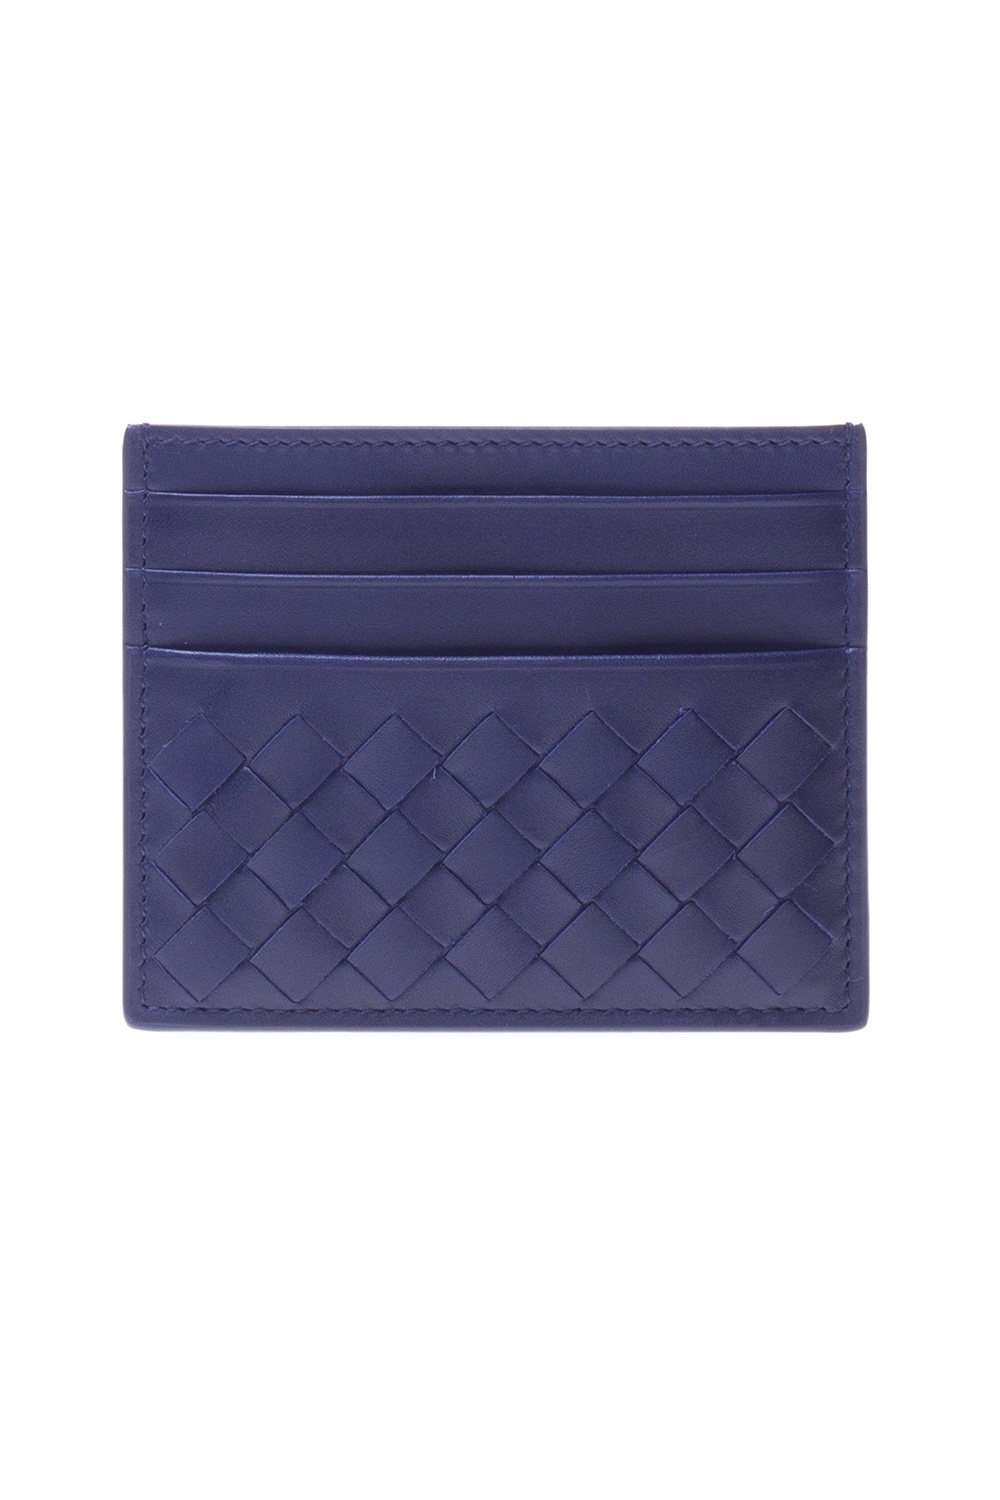 Louis Vuitton Slender Wallet Violet in Taurillon Calfskin Leather - US